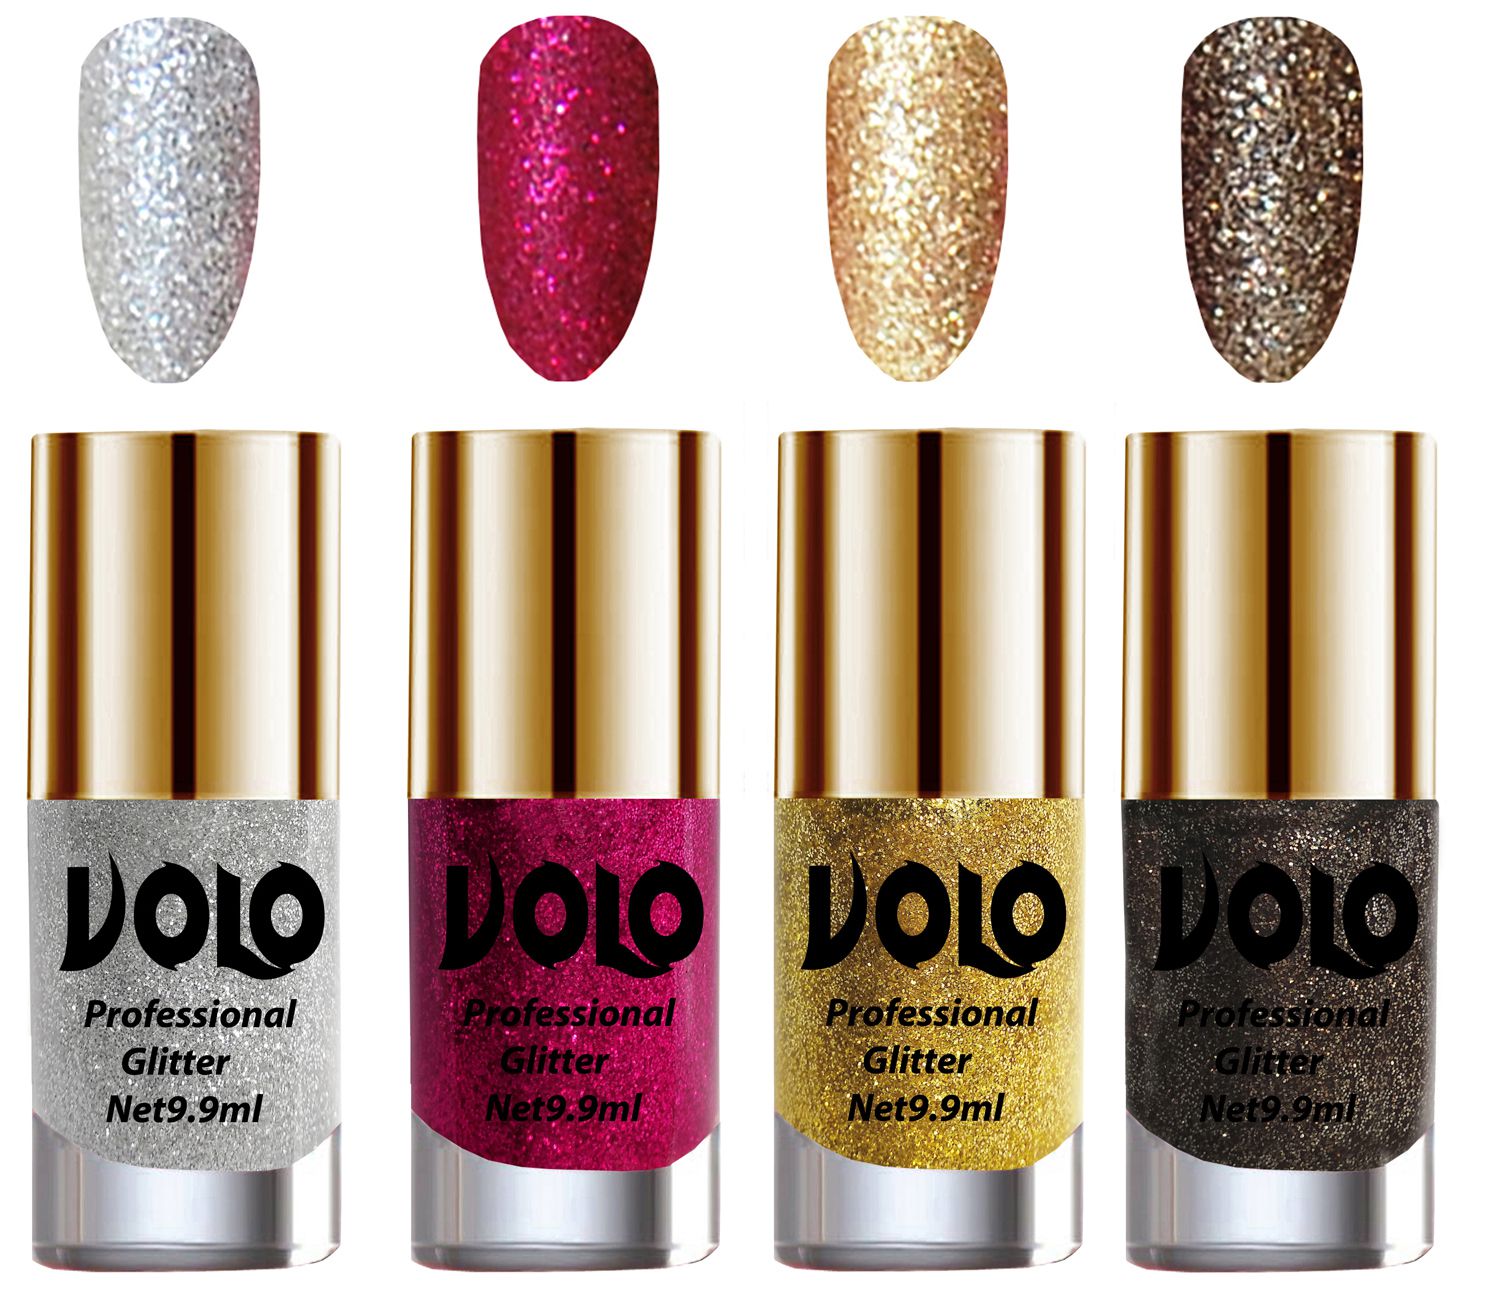     			VOLO Professionally Used Glitter Shine Nail Polish Silver,Magenta,Gold Grey Pack of 4 39 mL